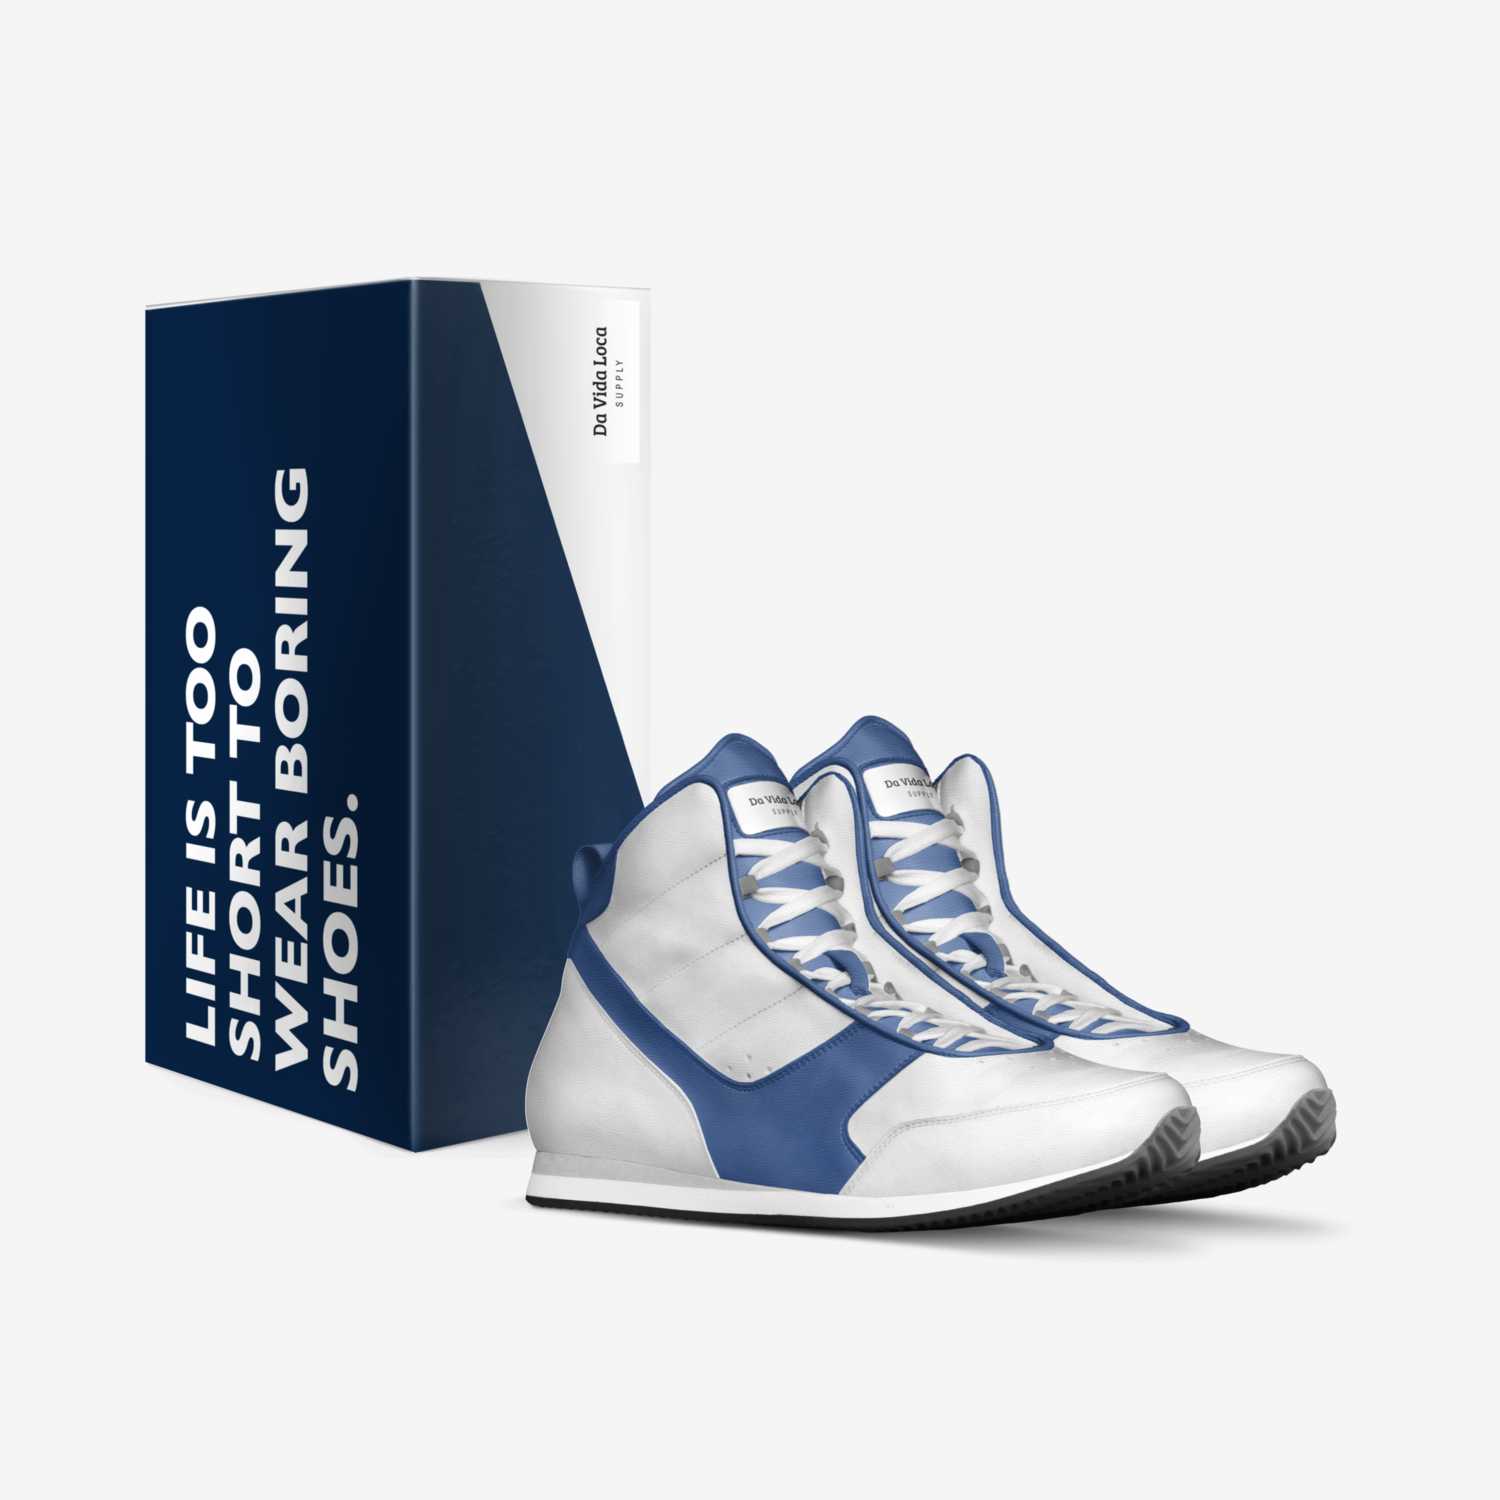 Da Vida Loca custom made in Italy shoes by Remi Daigle | Box view